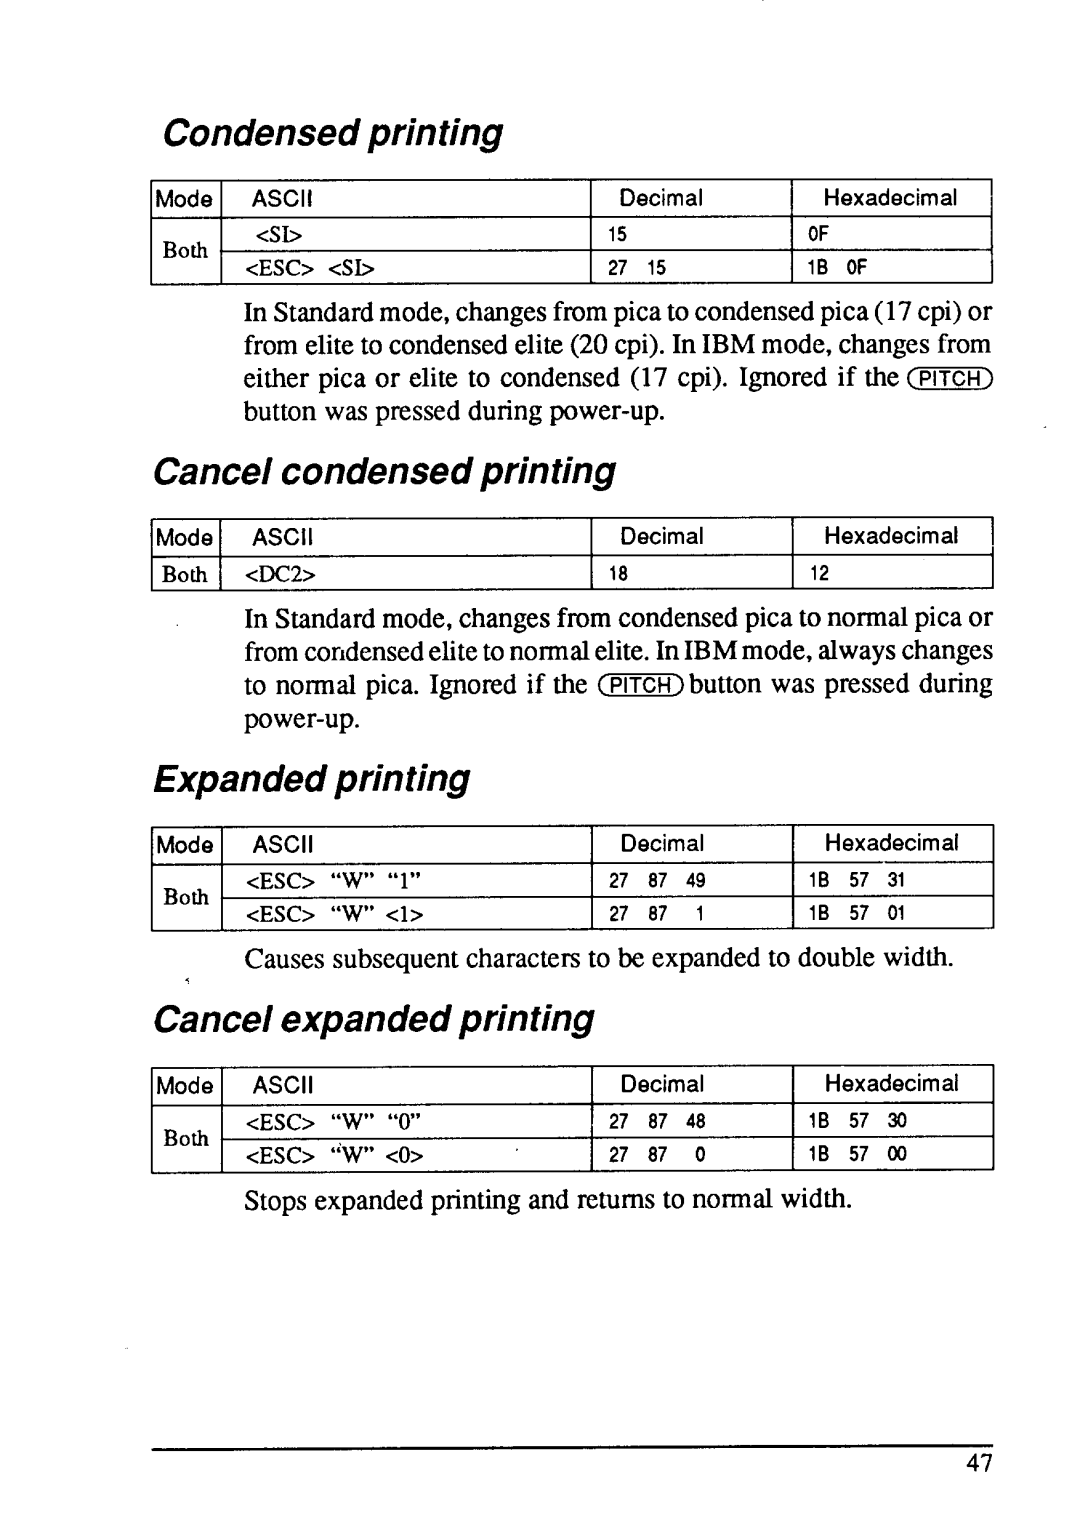 Star Micronics LC24-15 Condensed printing, Cancel condensed printing, Expanded printing, Cancel expanded printing 